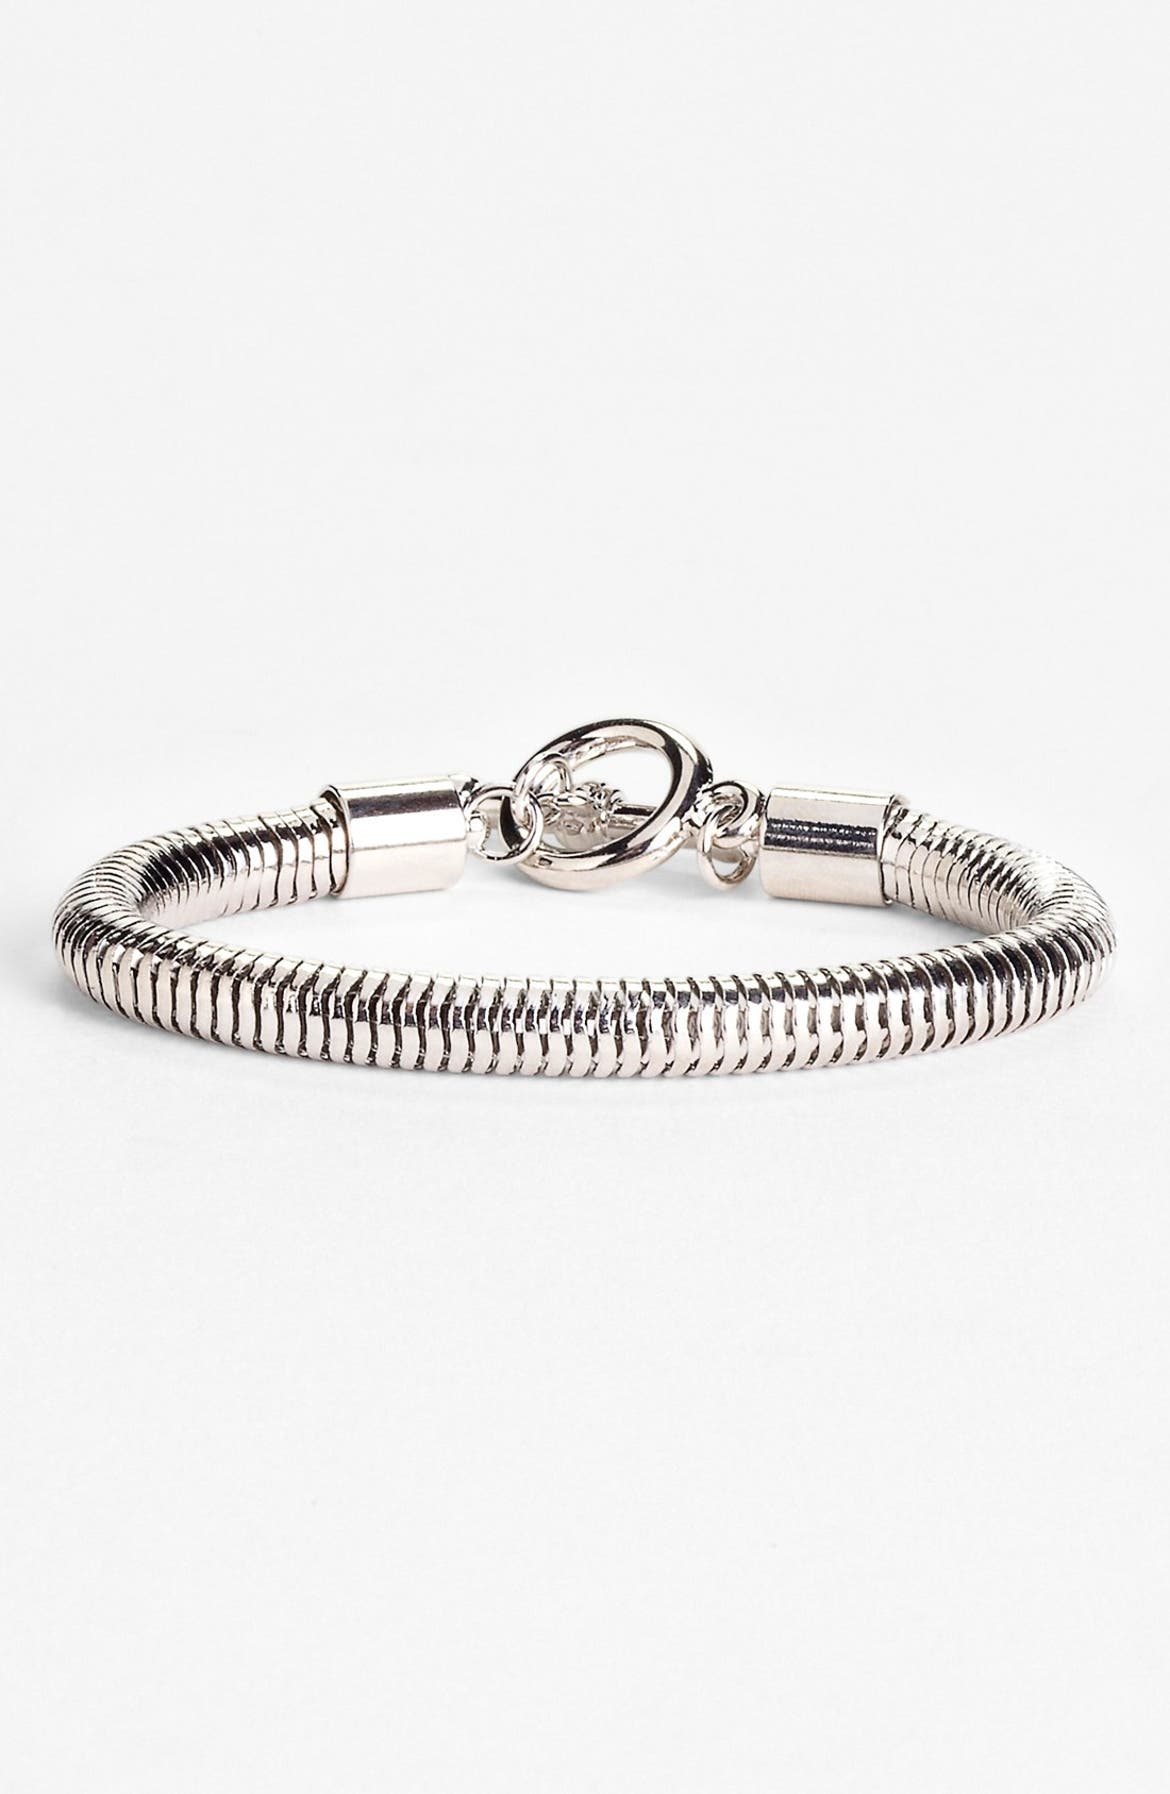 Natasha Couture 'Snake Chain' Bracelet | Nordstrom